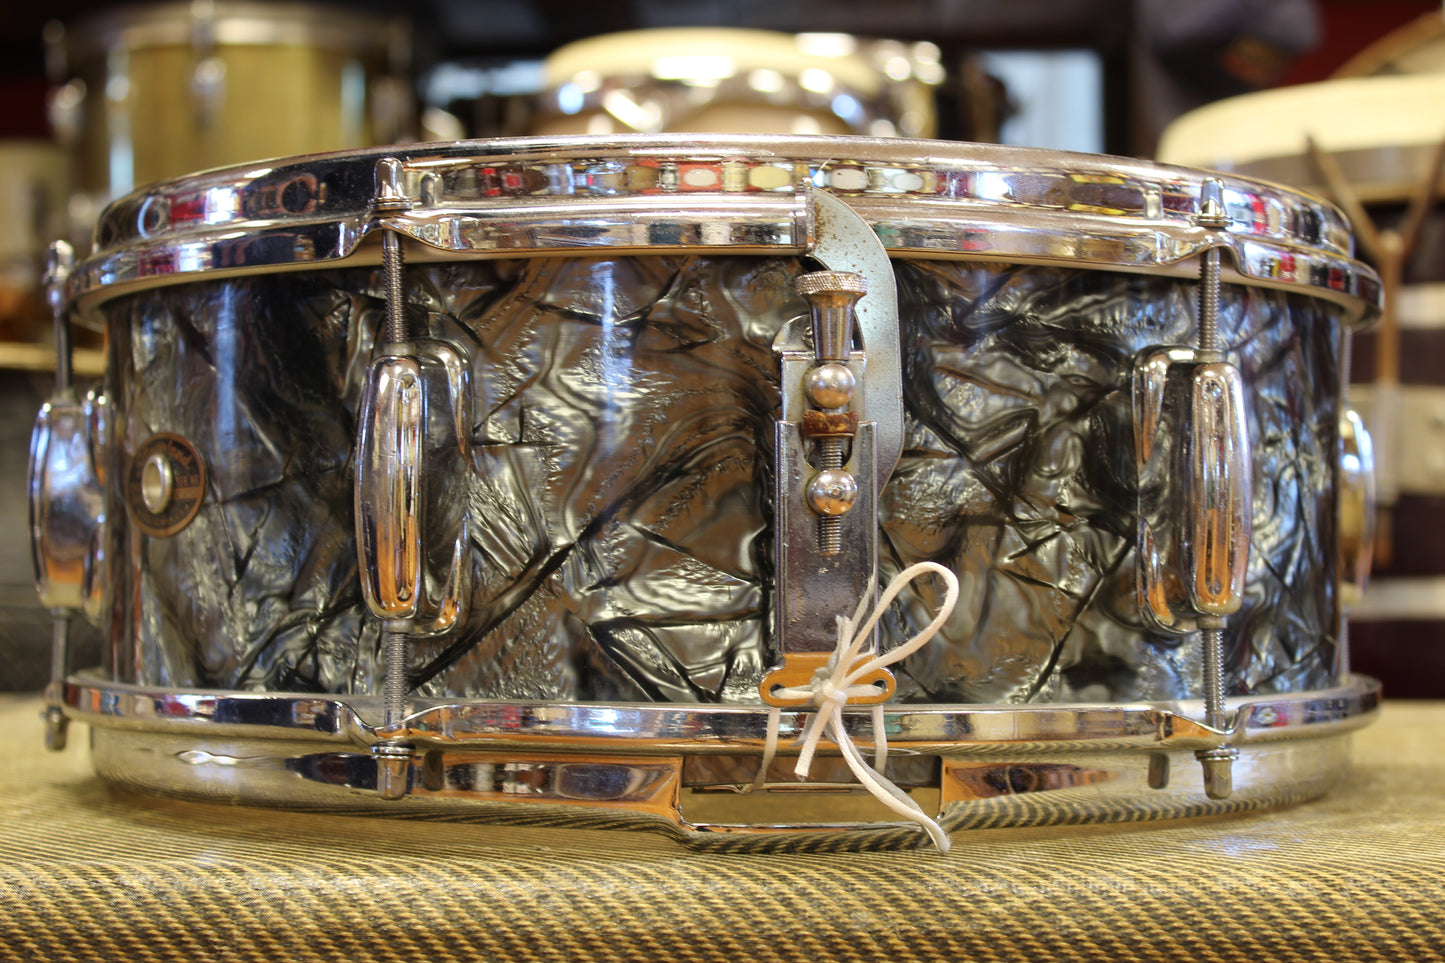 1966 Slingerland Deluxe Student Snare Drum 5.5"x14" in Black Diamond Pearl